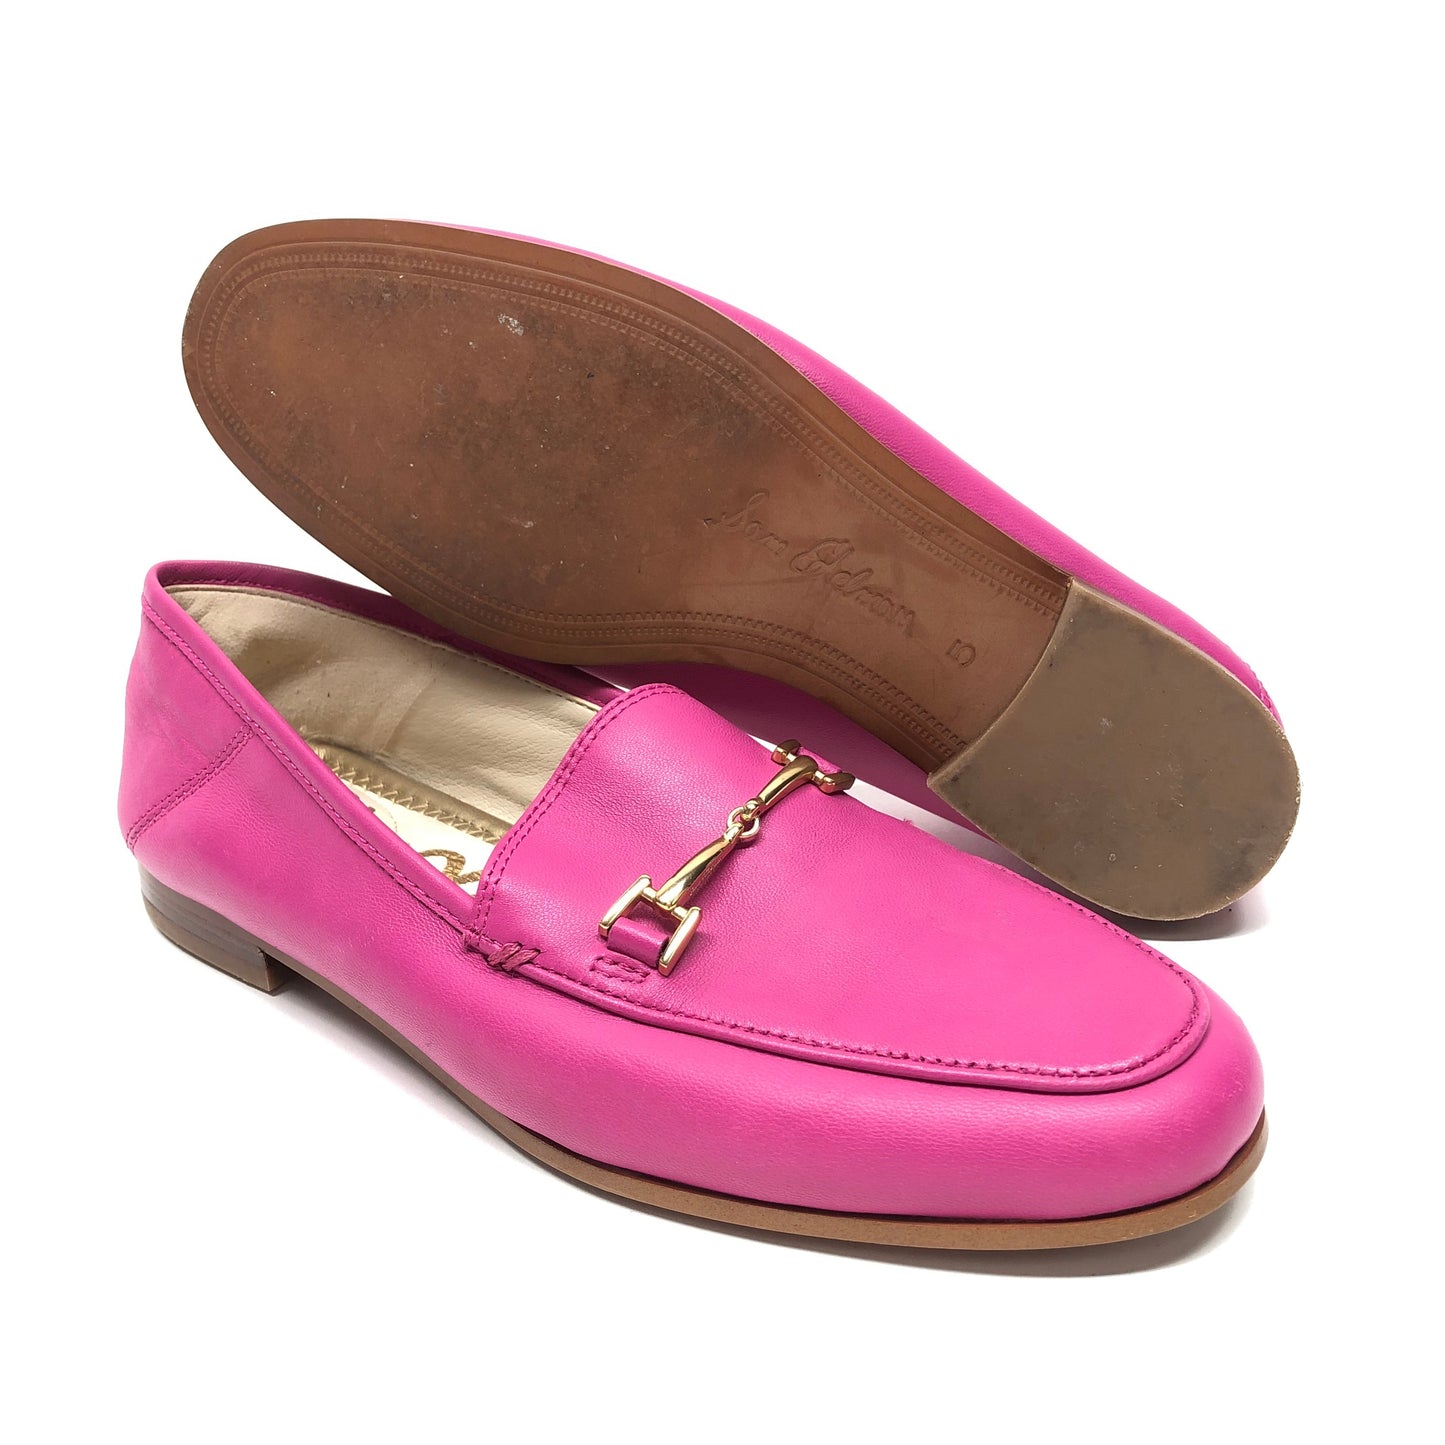 Pink Shoes Flats Sam Edelman, Size 5